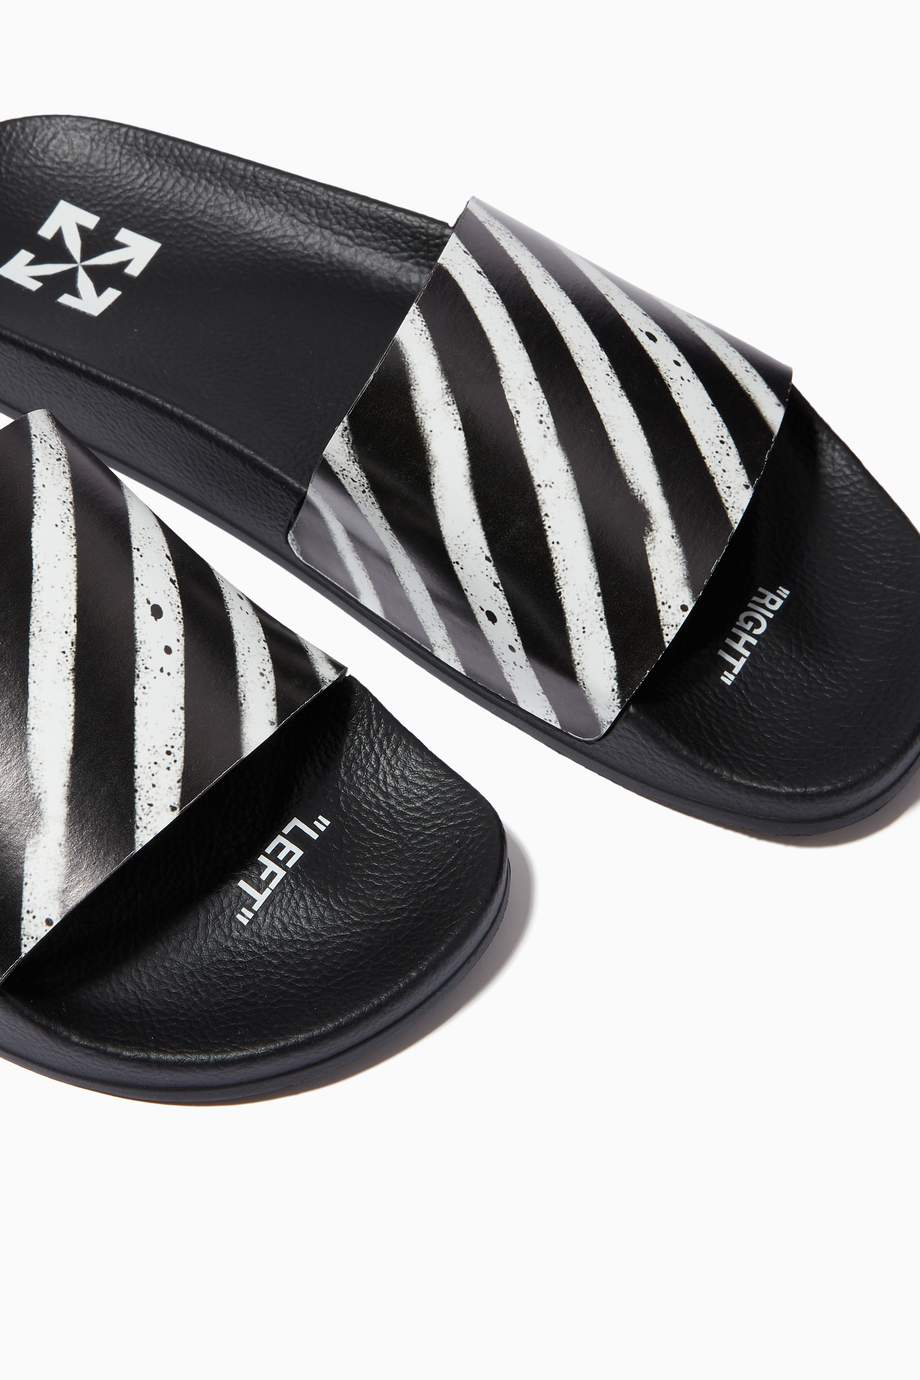 Shop Off-White Black Zebra Print Slides in PU for Men | Ounass Oman